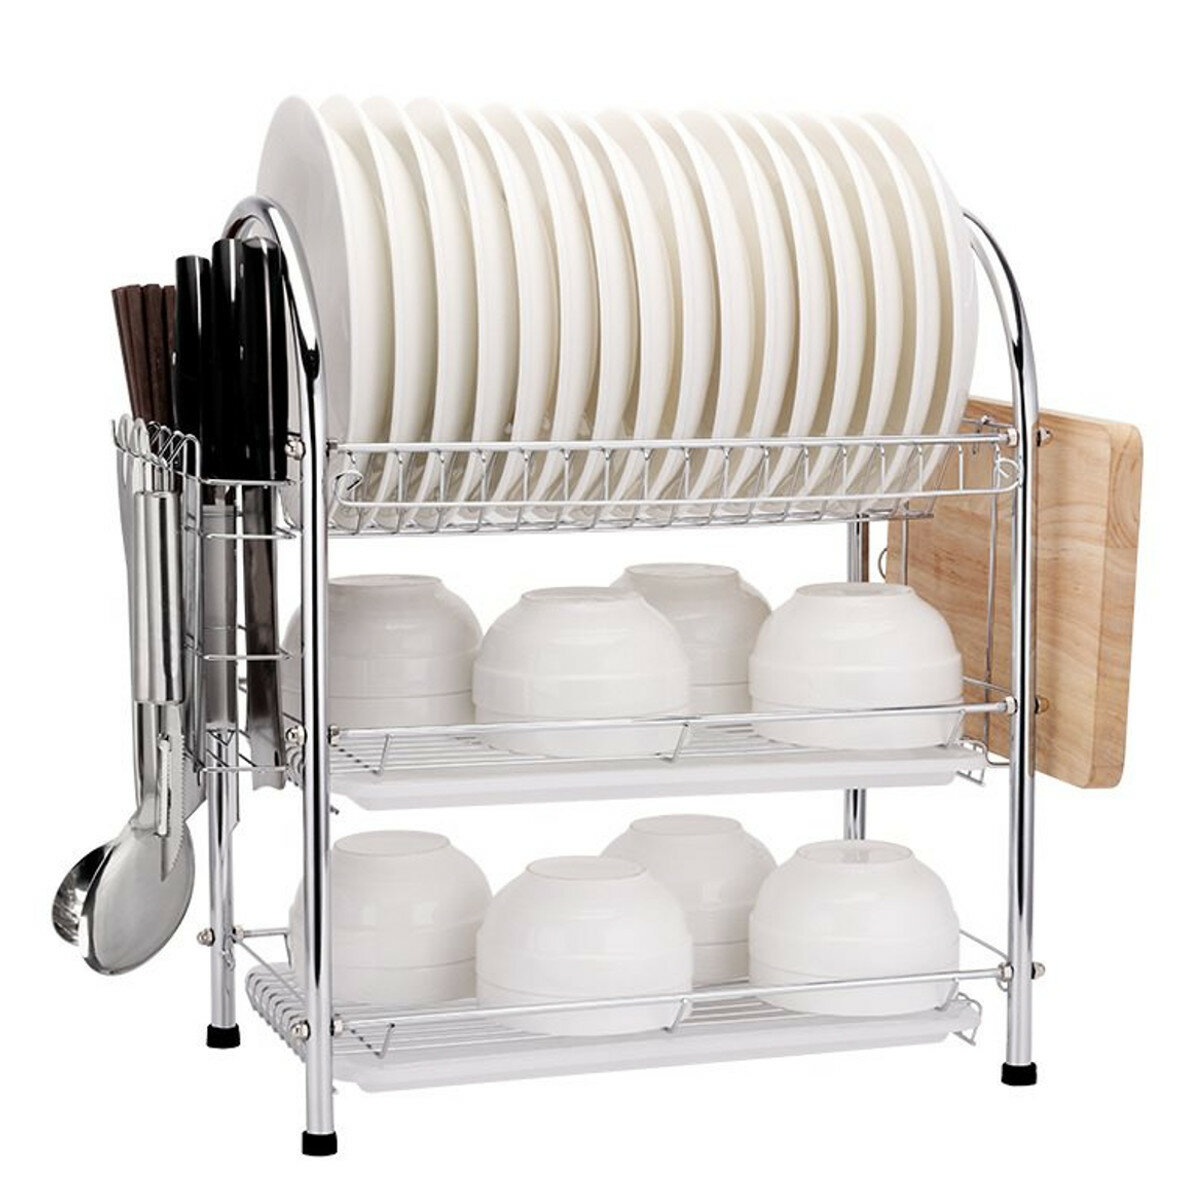 

3 Tier Chrome Kitchen Dish Rack Cup Drying Drainer Tray Cutlery Holder Storage Kitchen Storage Rack